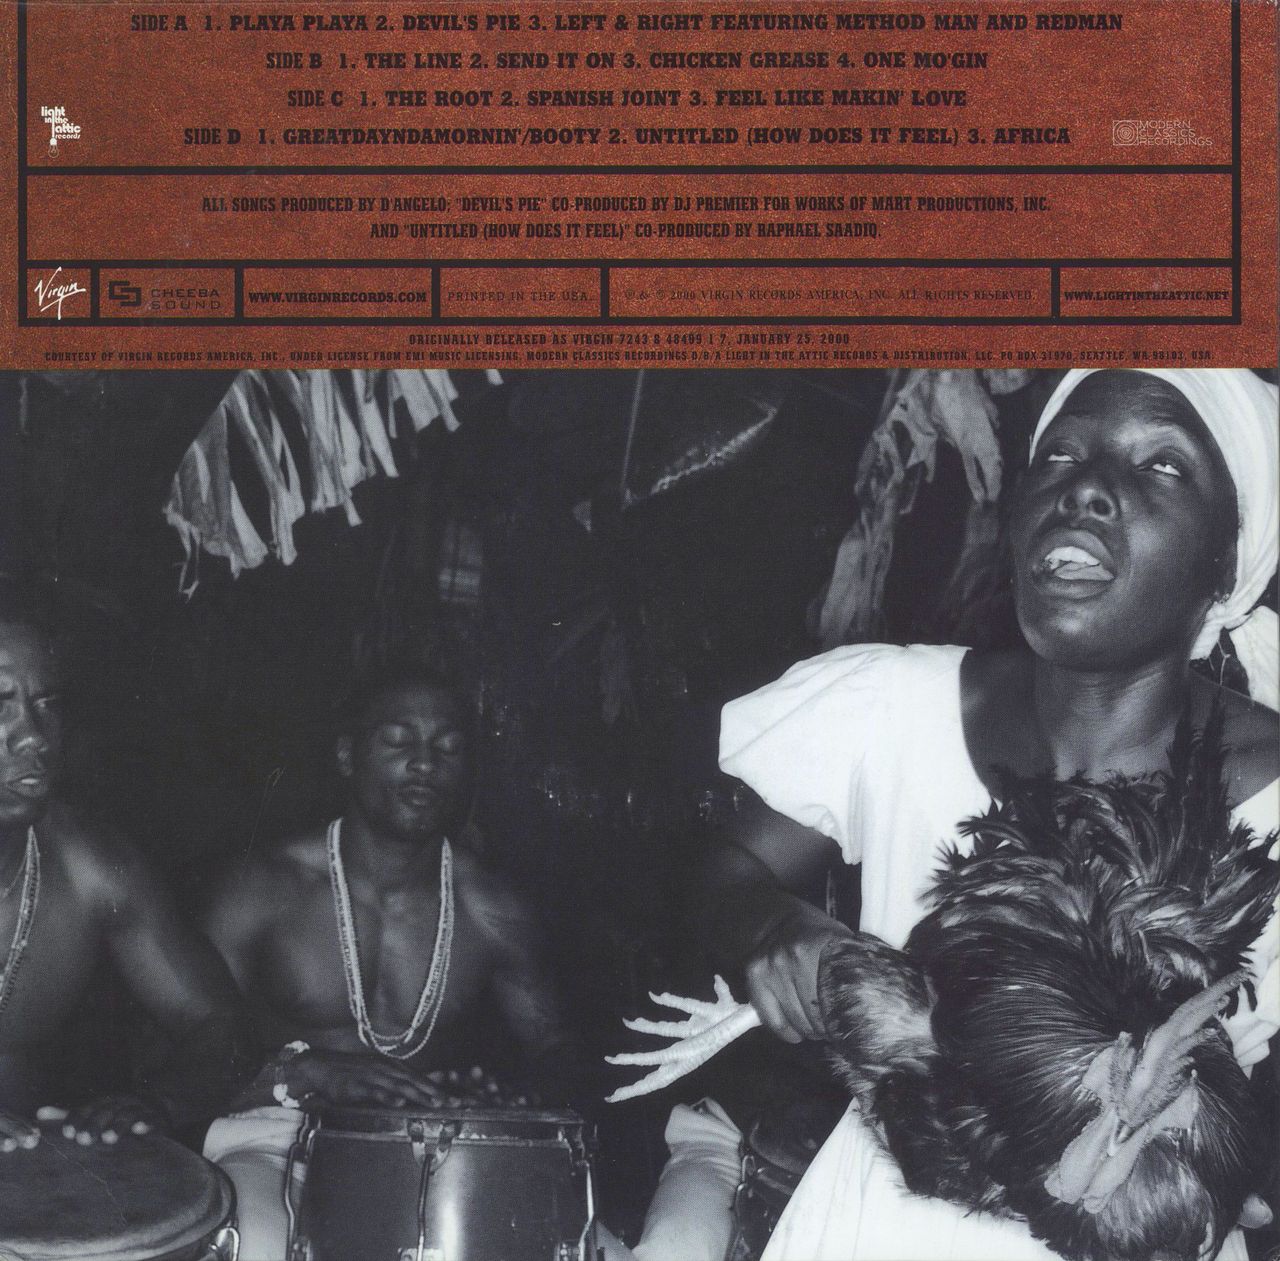 D'Angelo Voodoo - Reissue US 2-LP vinyl set — RareVinyl.com